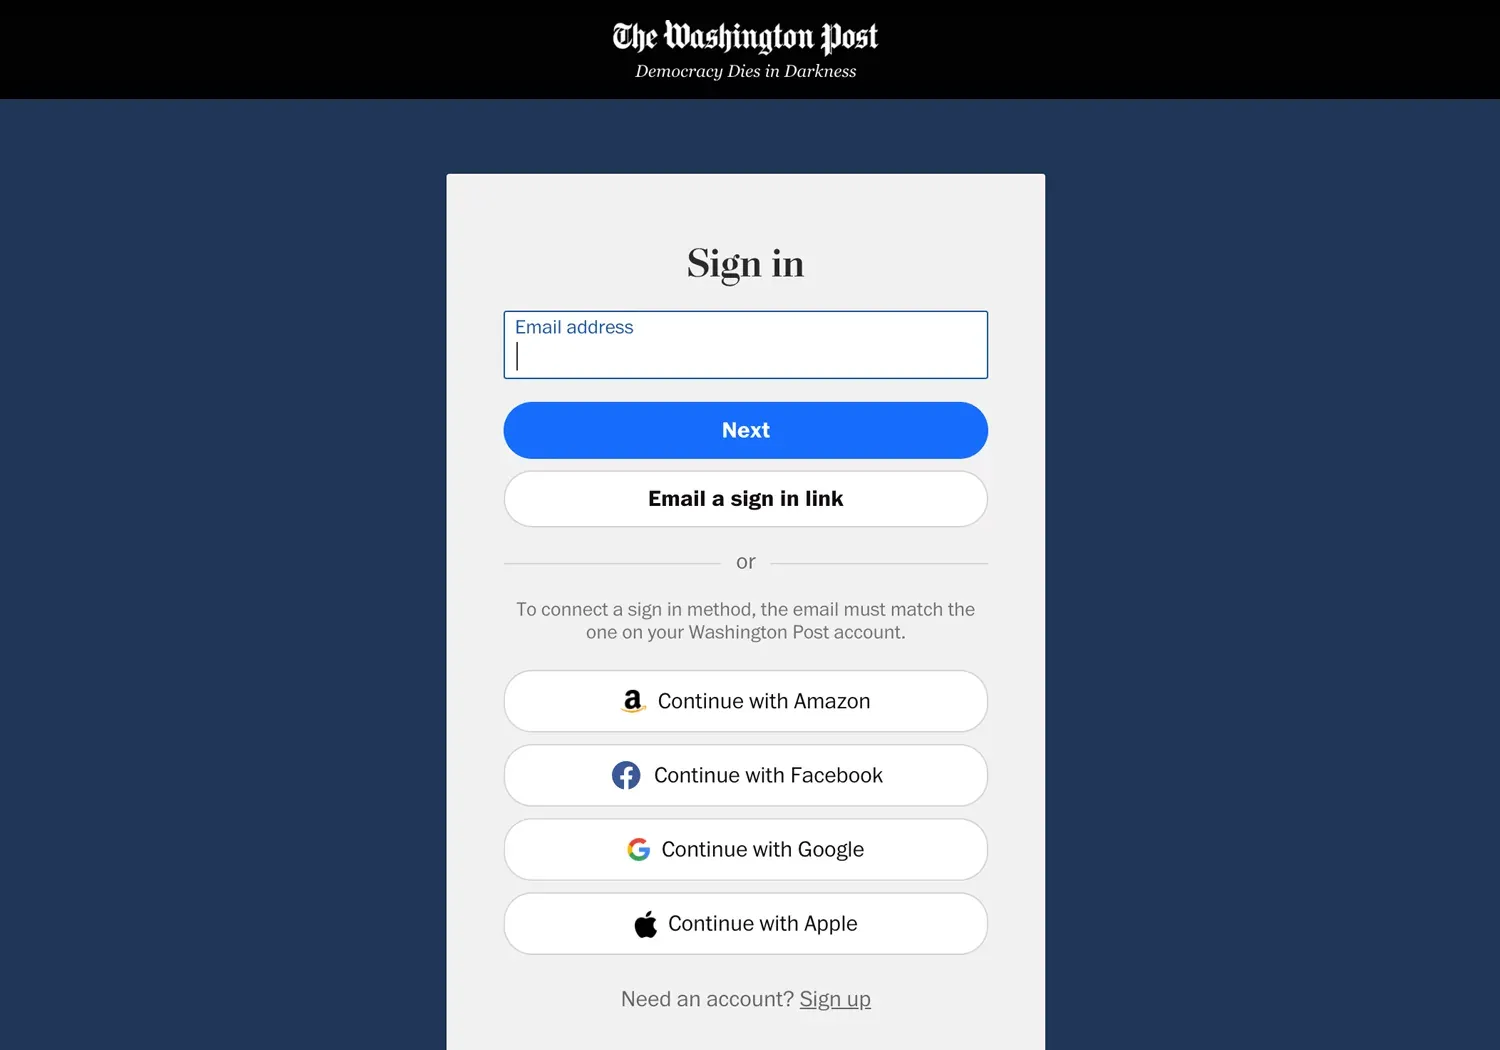 The Washington Post's login page